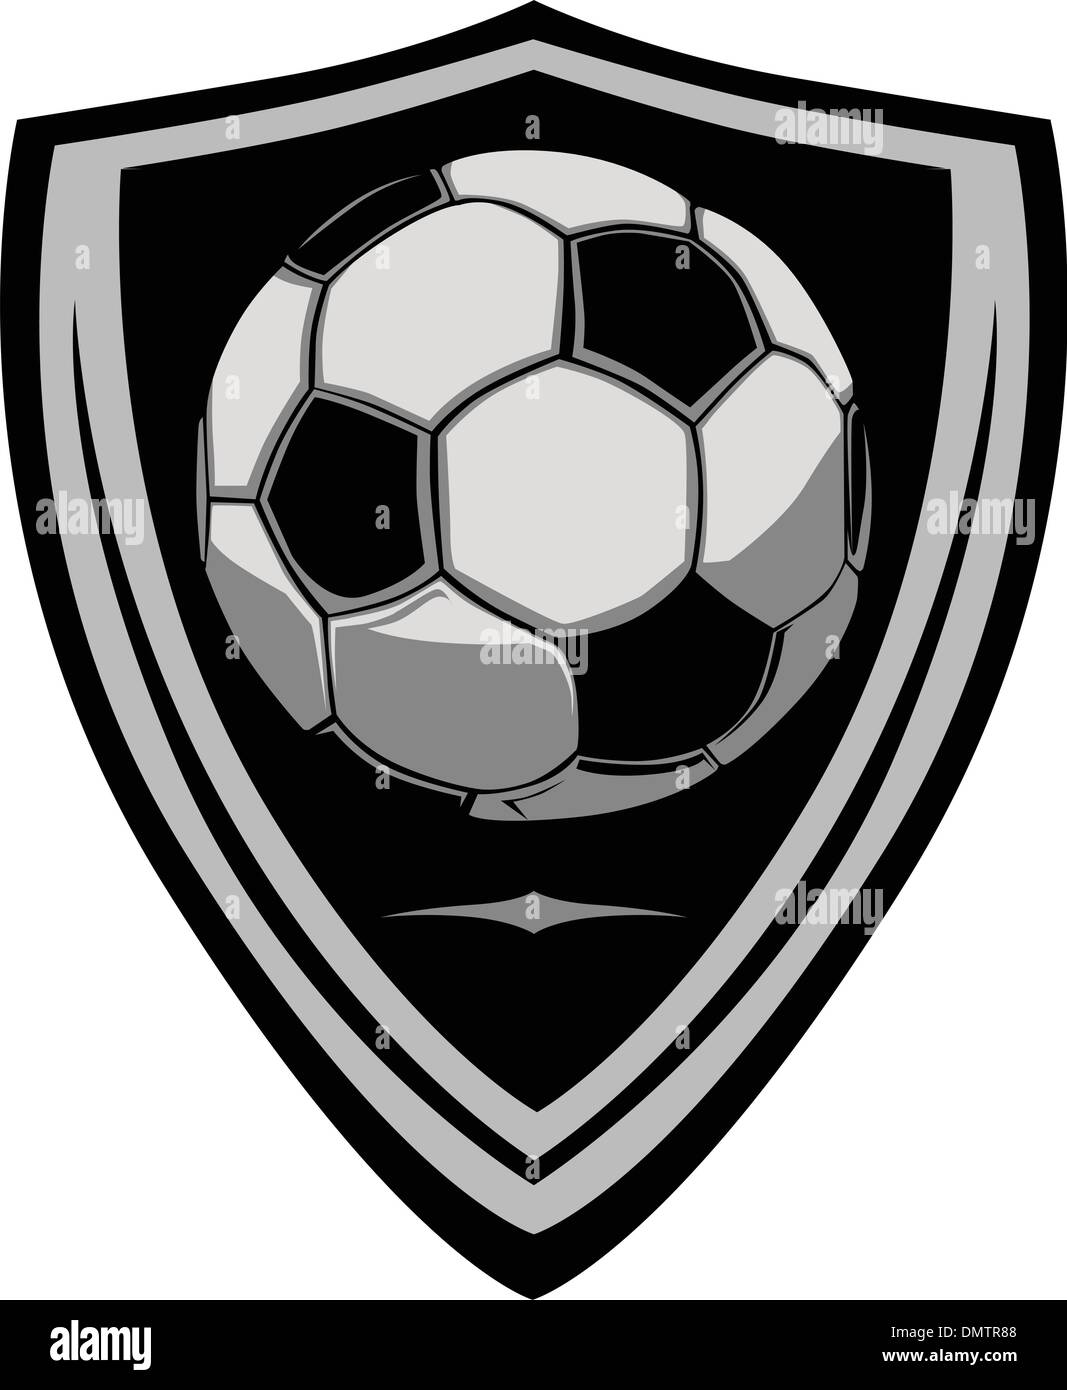 Fußball-Vorlage mit Schild Stock-Vektorgrafik - Alamy